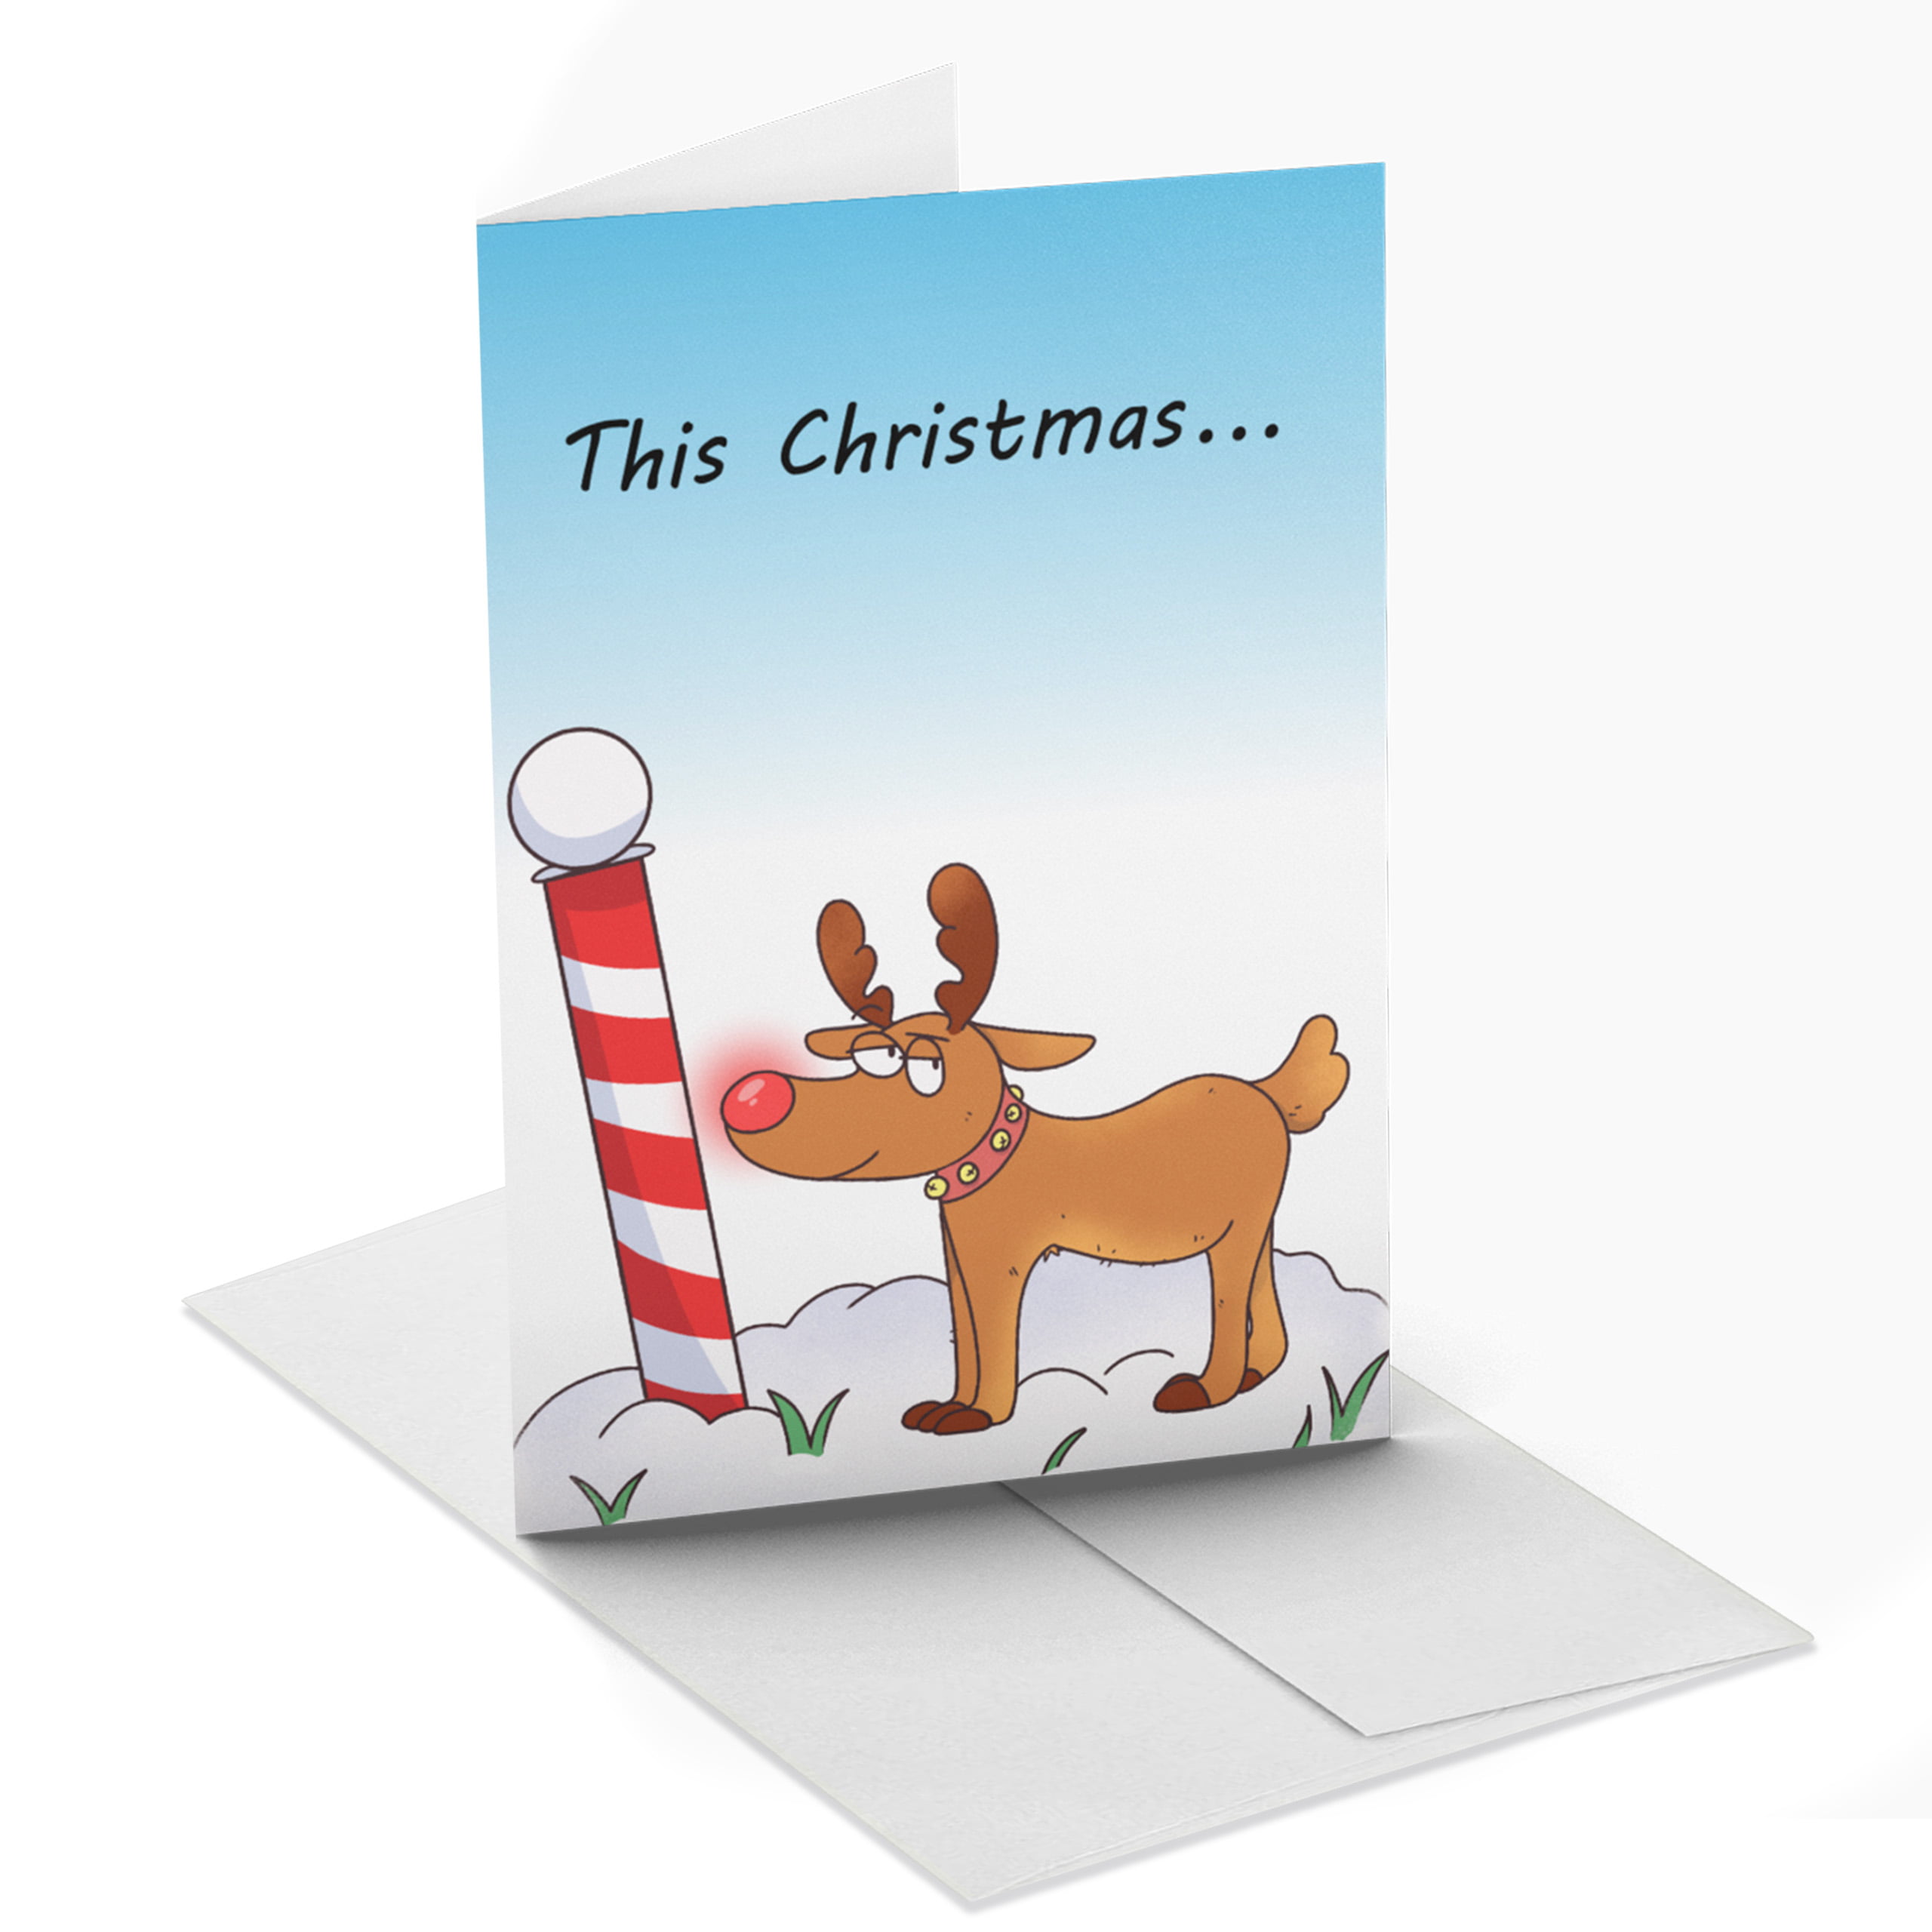 Son Funny Christmas Xmas Card Cheeky Comedy Humour Witty Amusing Novelty Joke 